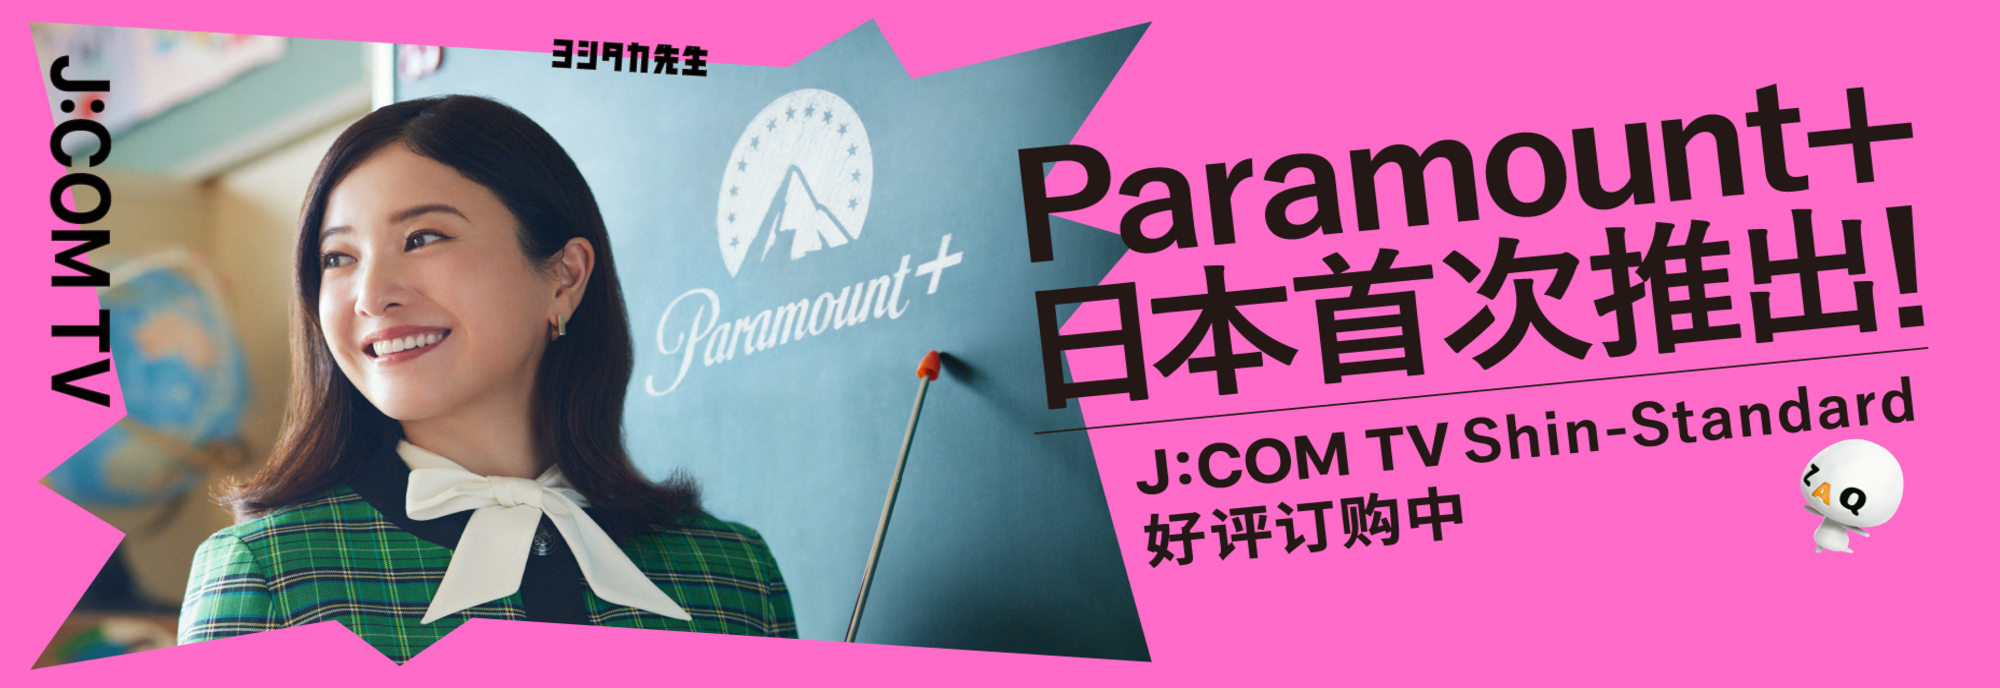 J:COM TV Shin Standard现已推出 - 如果您想观看 Paramount Plus -J:COM